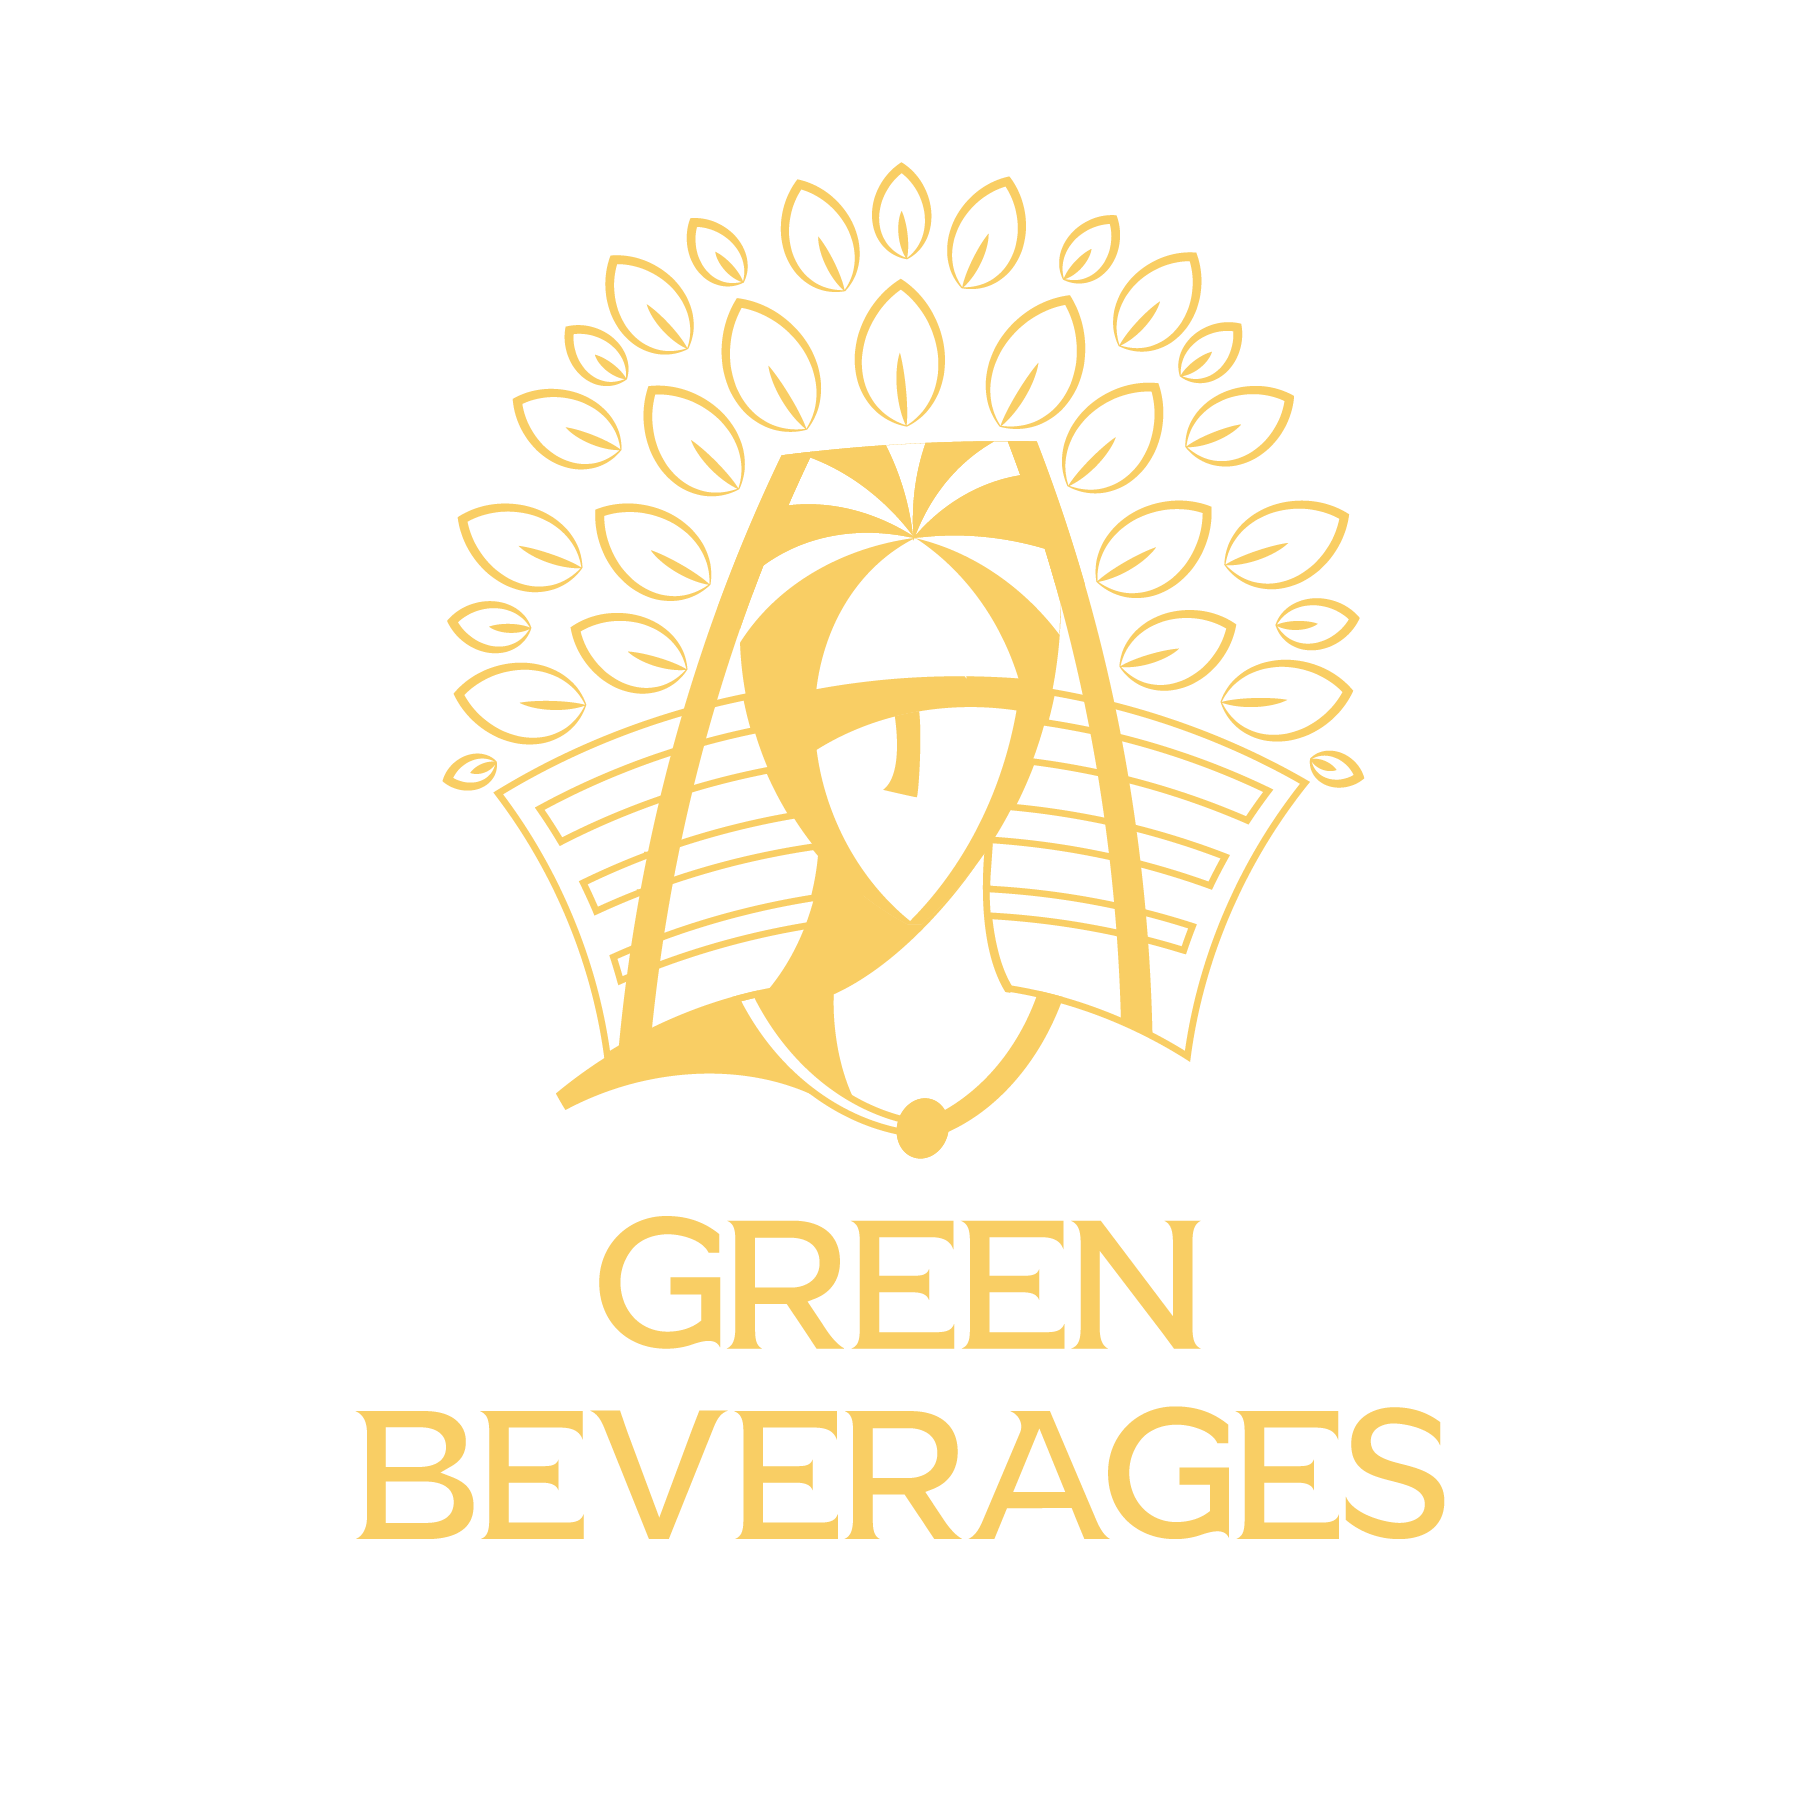 Green beverages: "CTC tea" or "Crush, Tear, Curl tea" GB_Logo